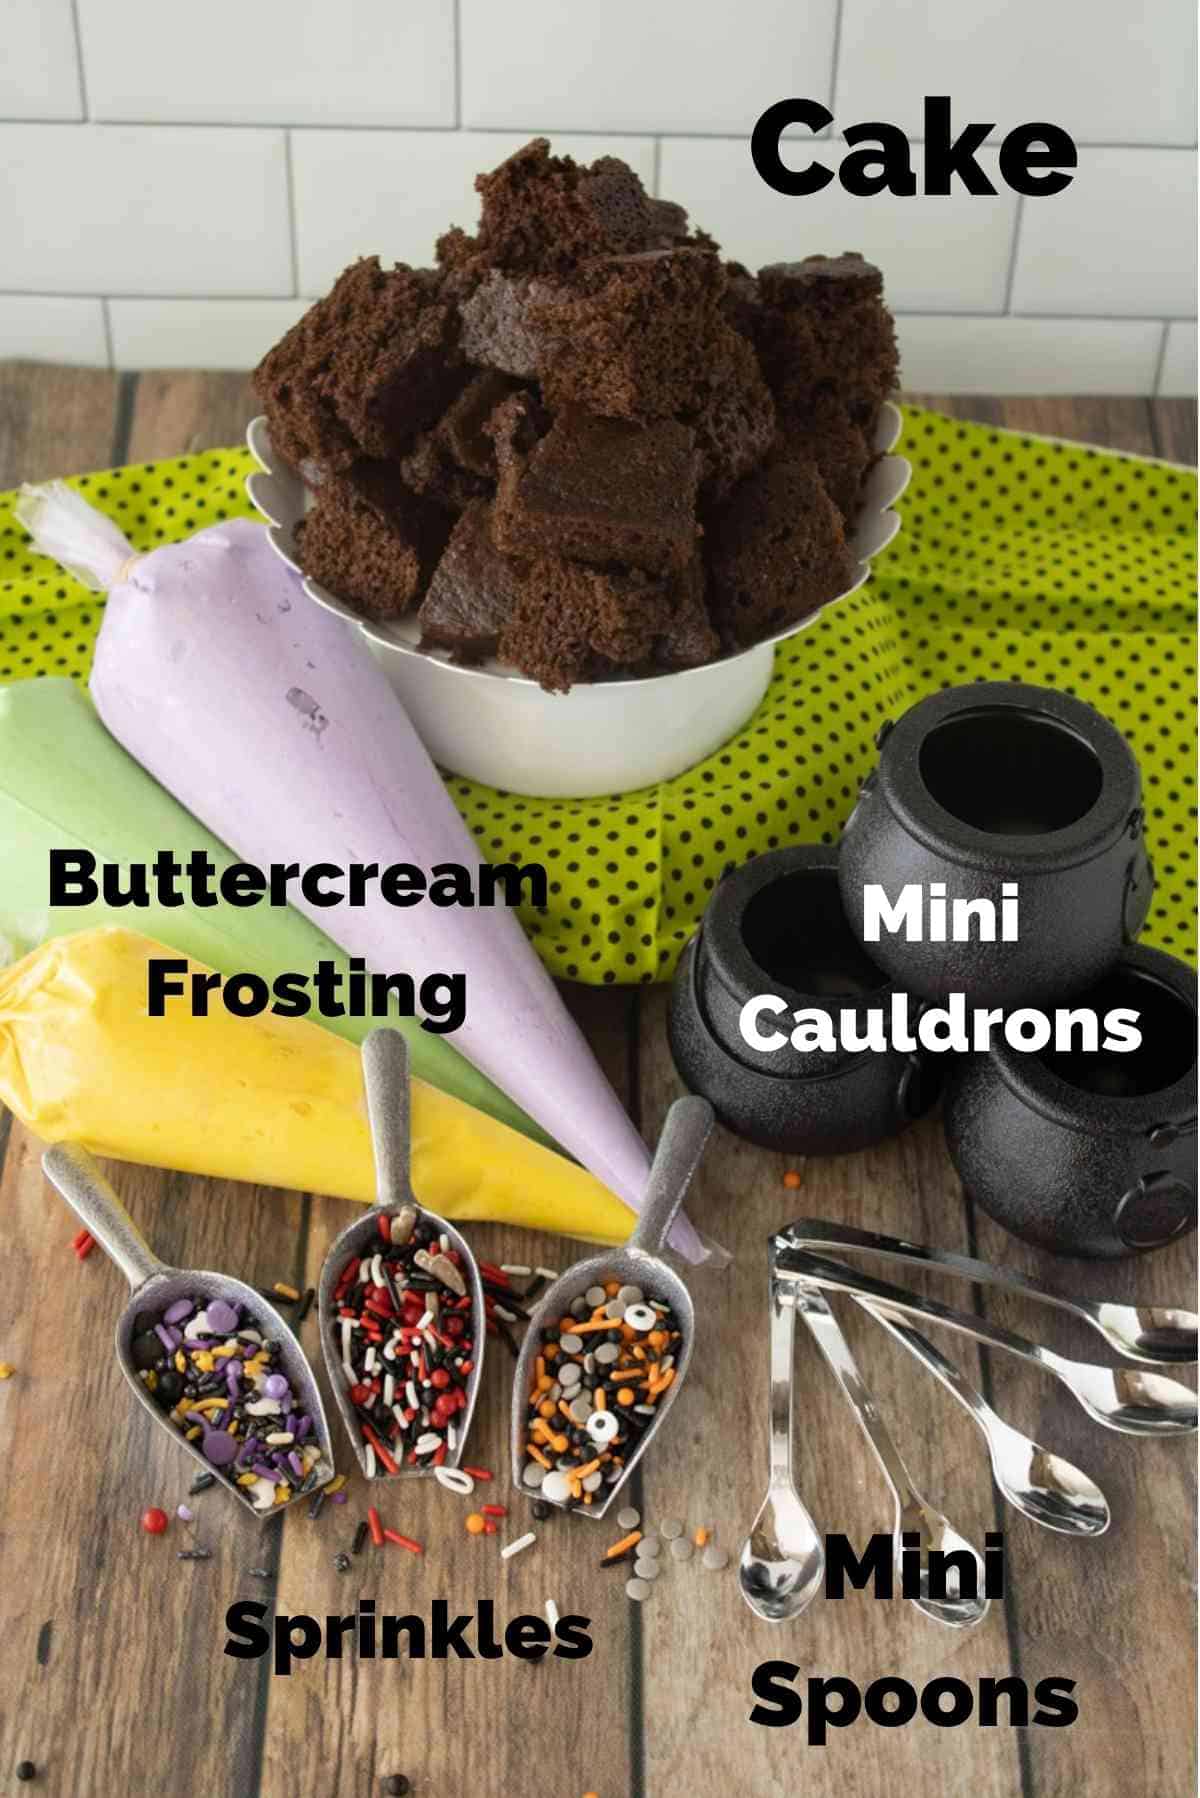 Cake, buttercream frosting, sprinkles, mini cauldrons and mini spoons.